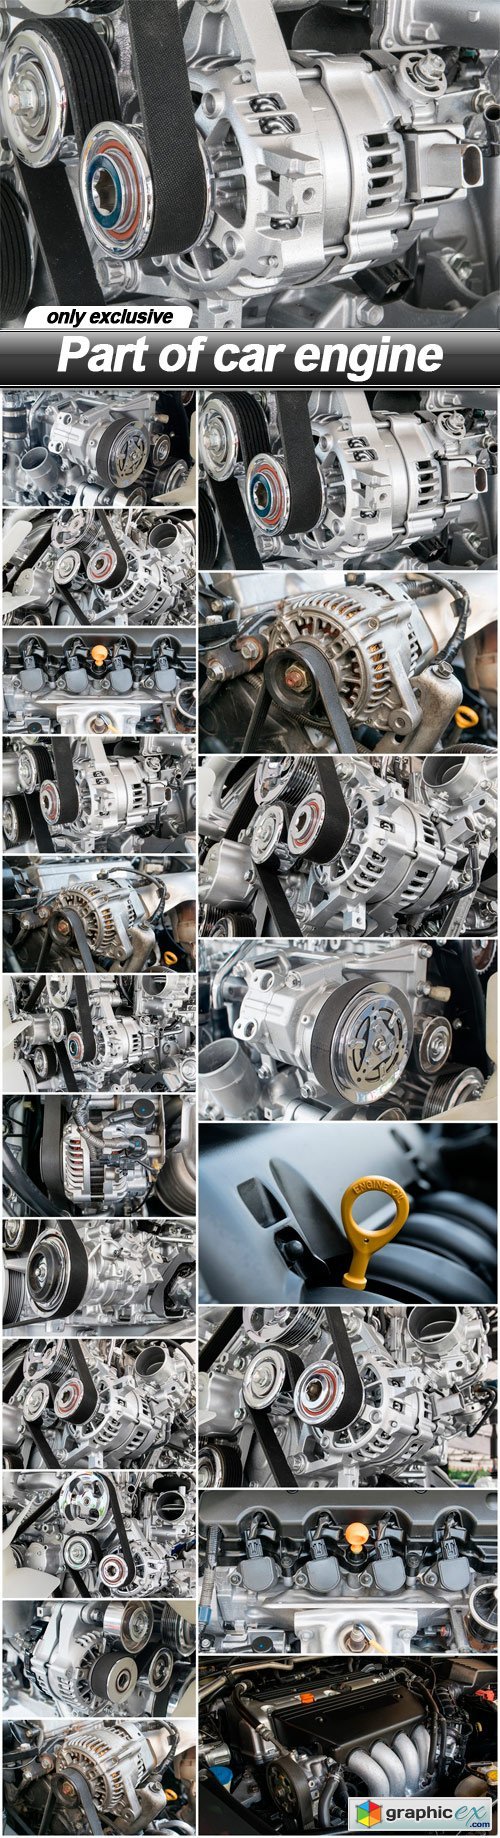 Part of car engine - 20 UHQ JPEG